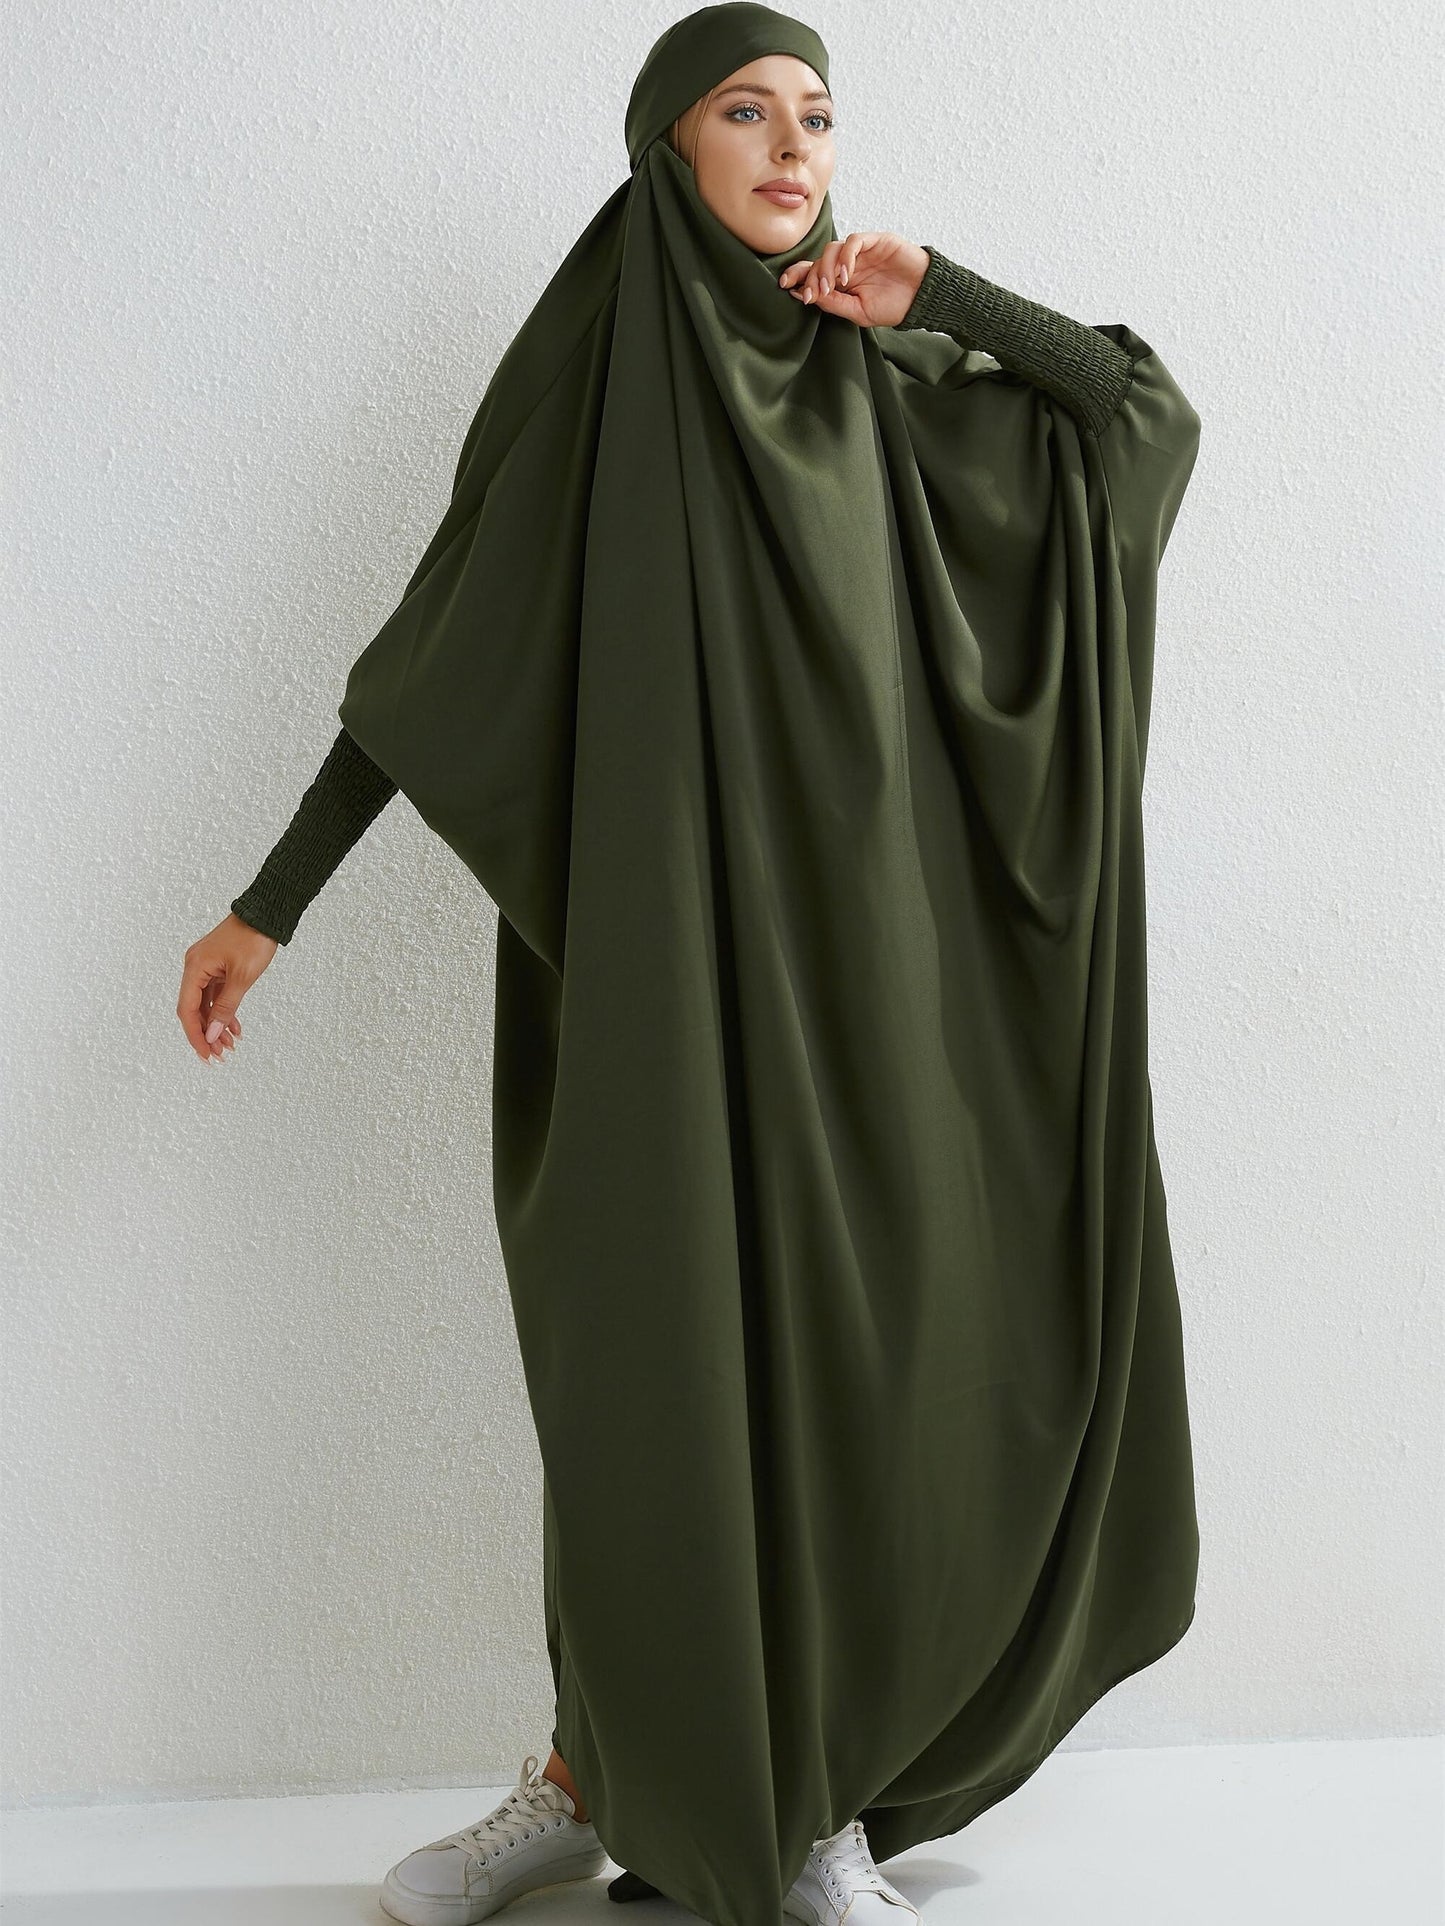 Solid One-Piece Abaya With Hijab